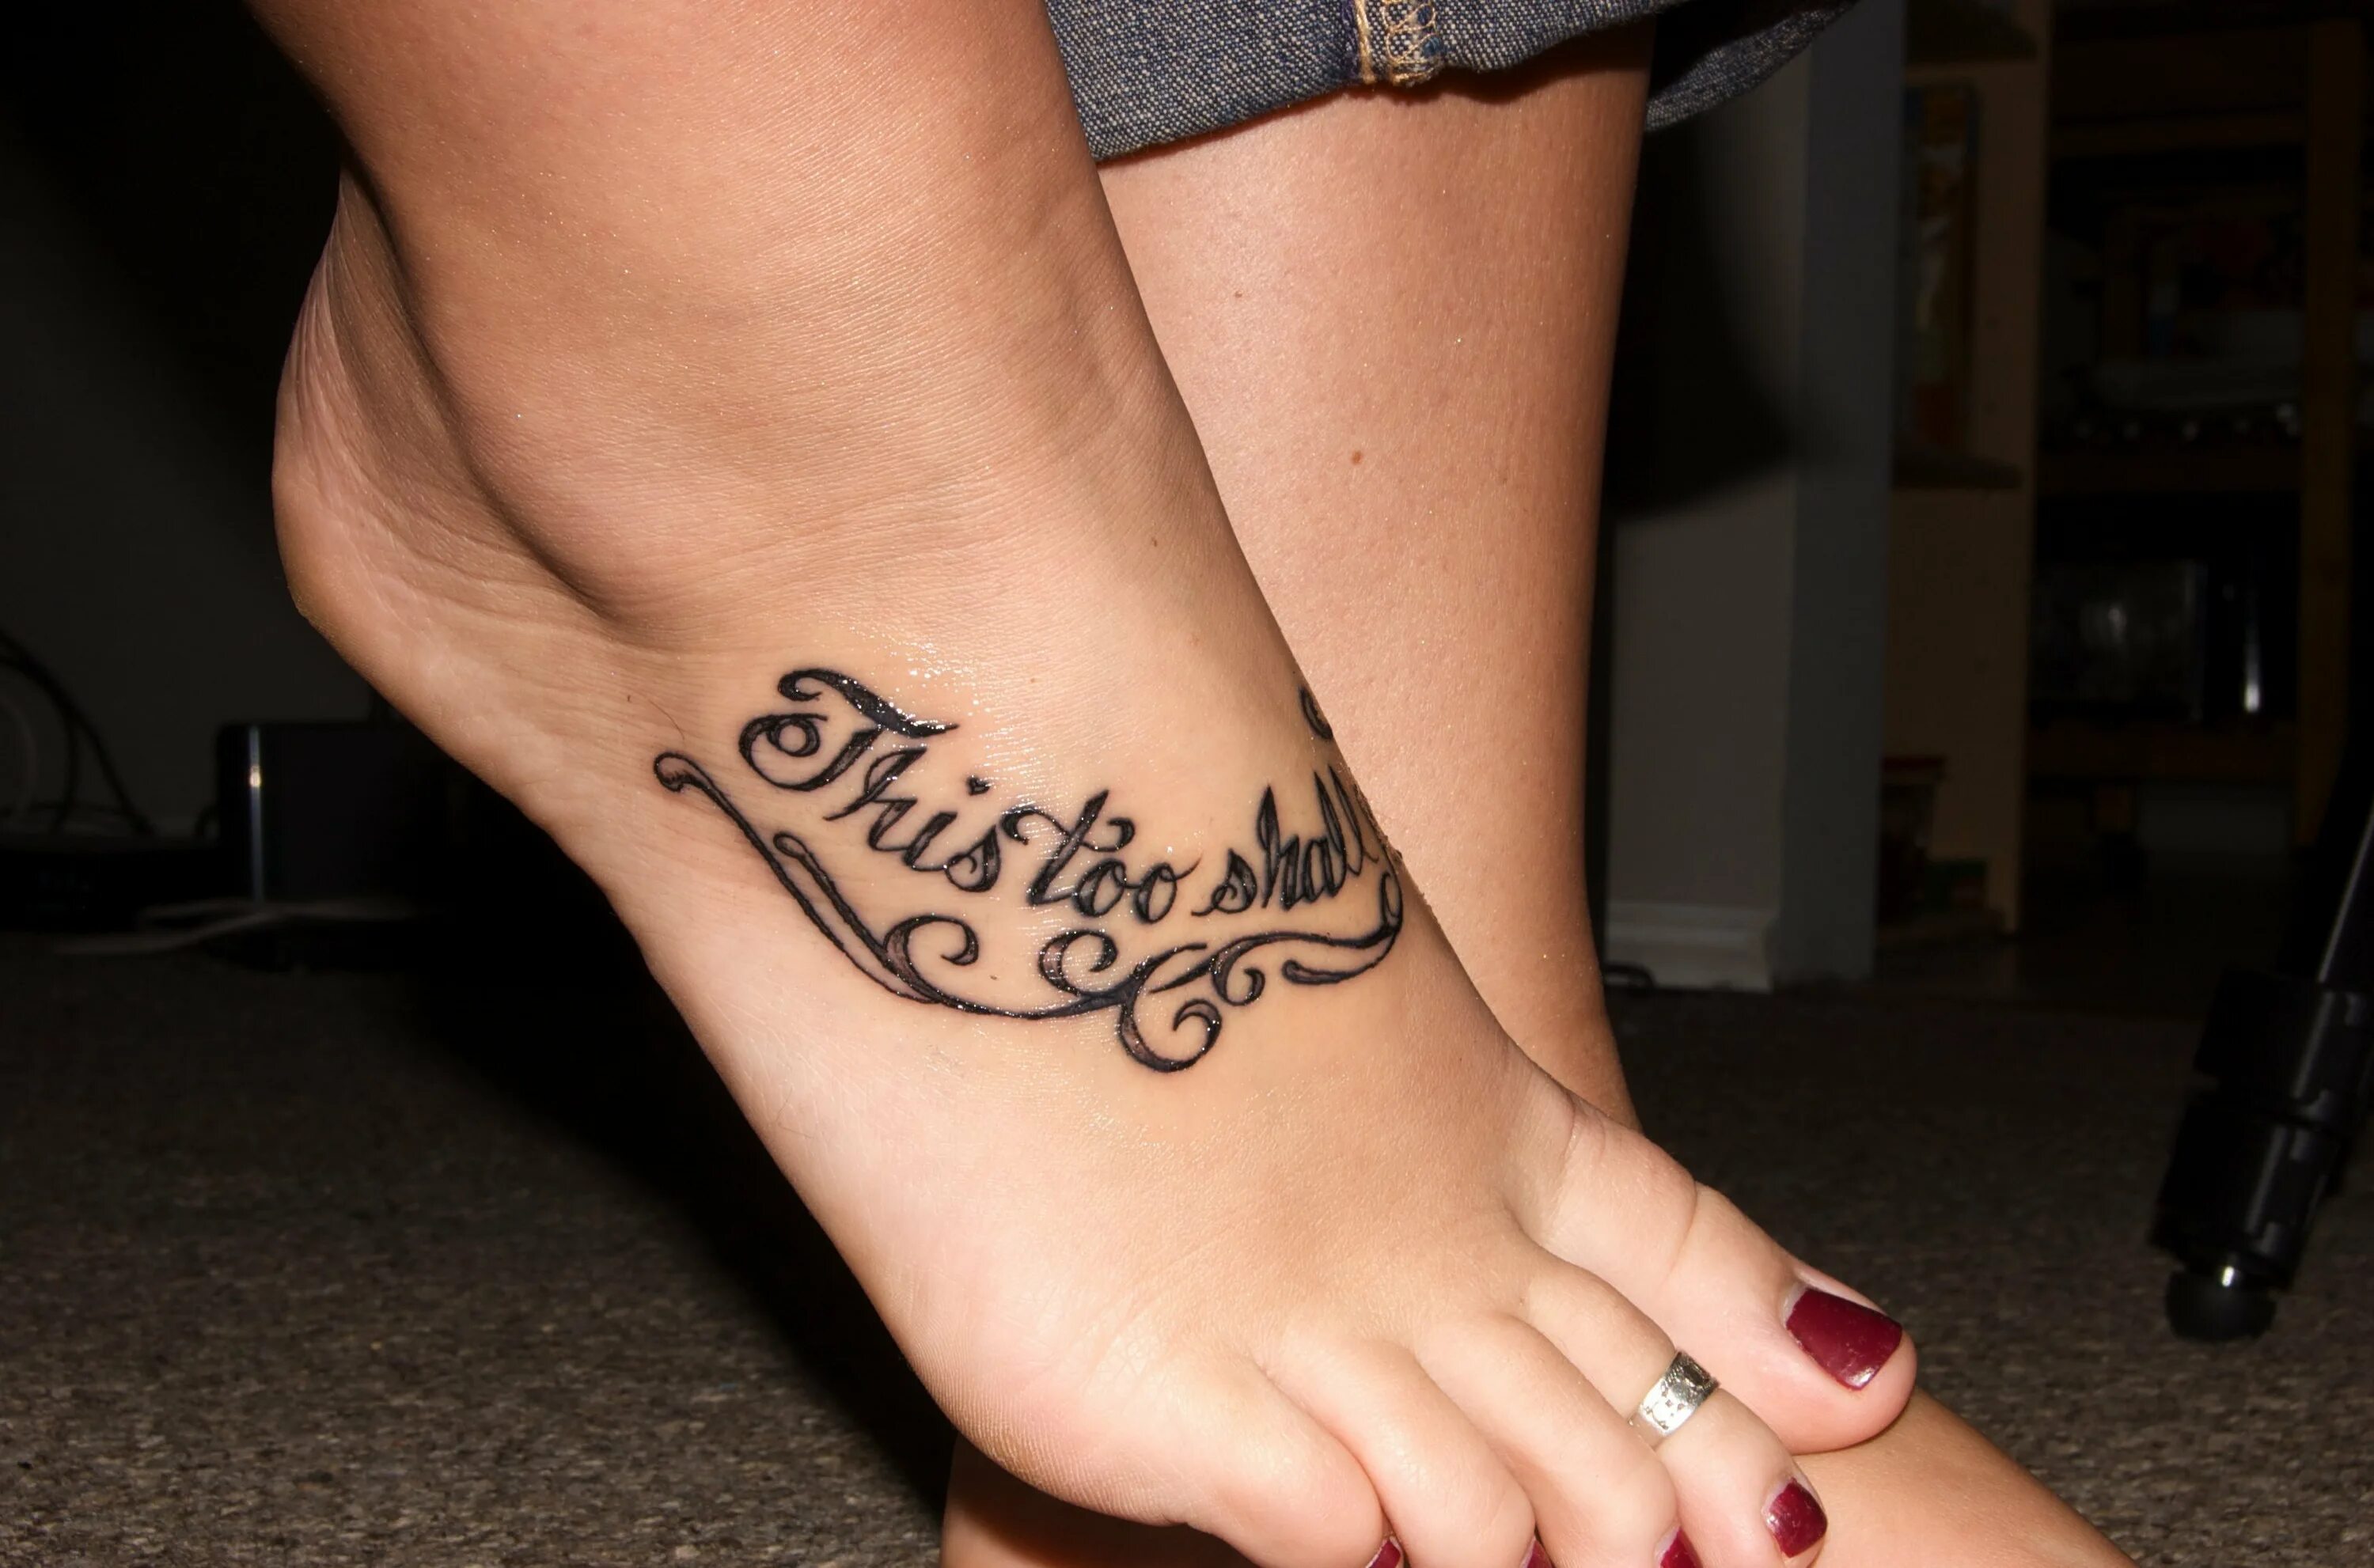 Тату на ноге. Татуировки для девушек на ноге. Тату для девушек на ноге надписи. Тату на ступне. Надписи на подошве